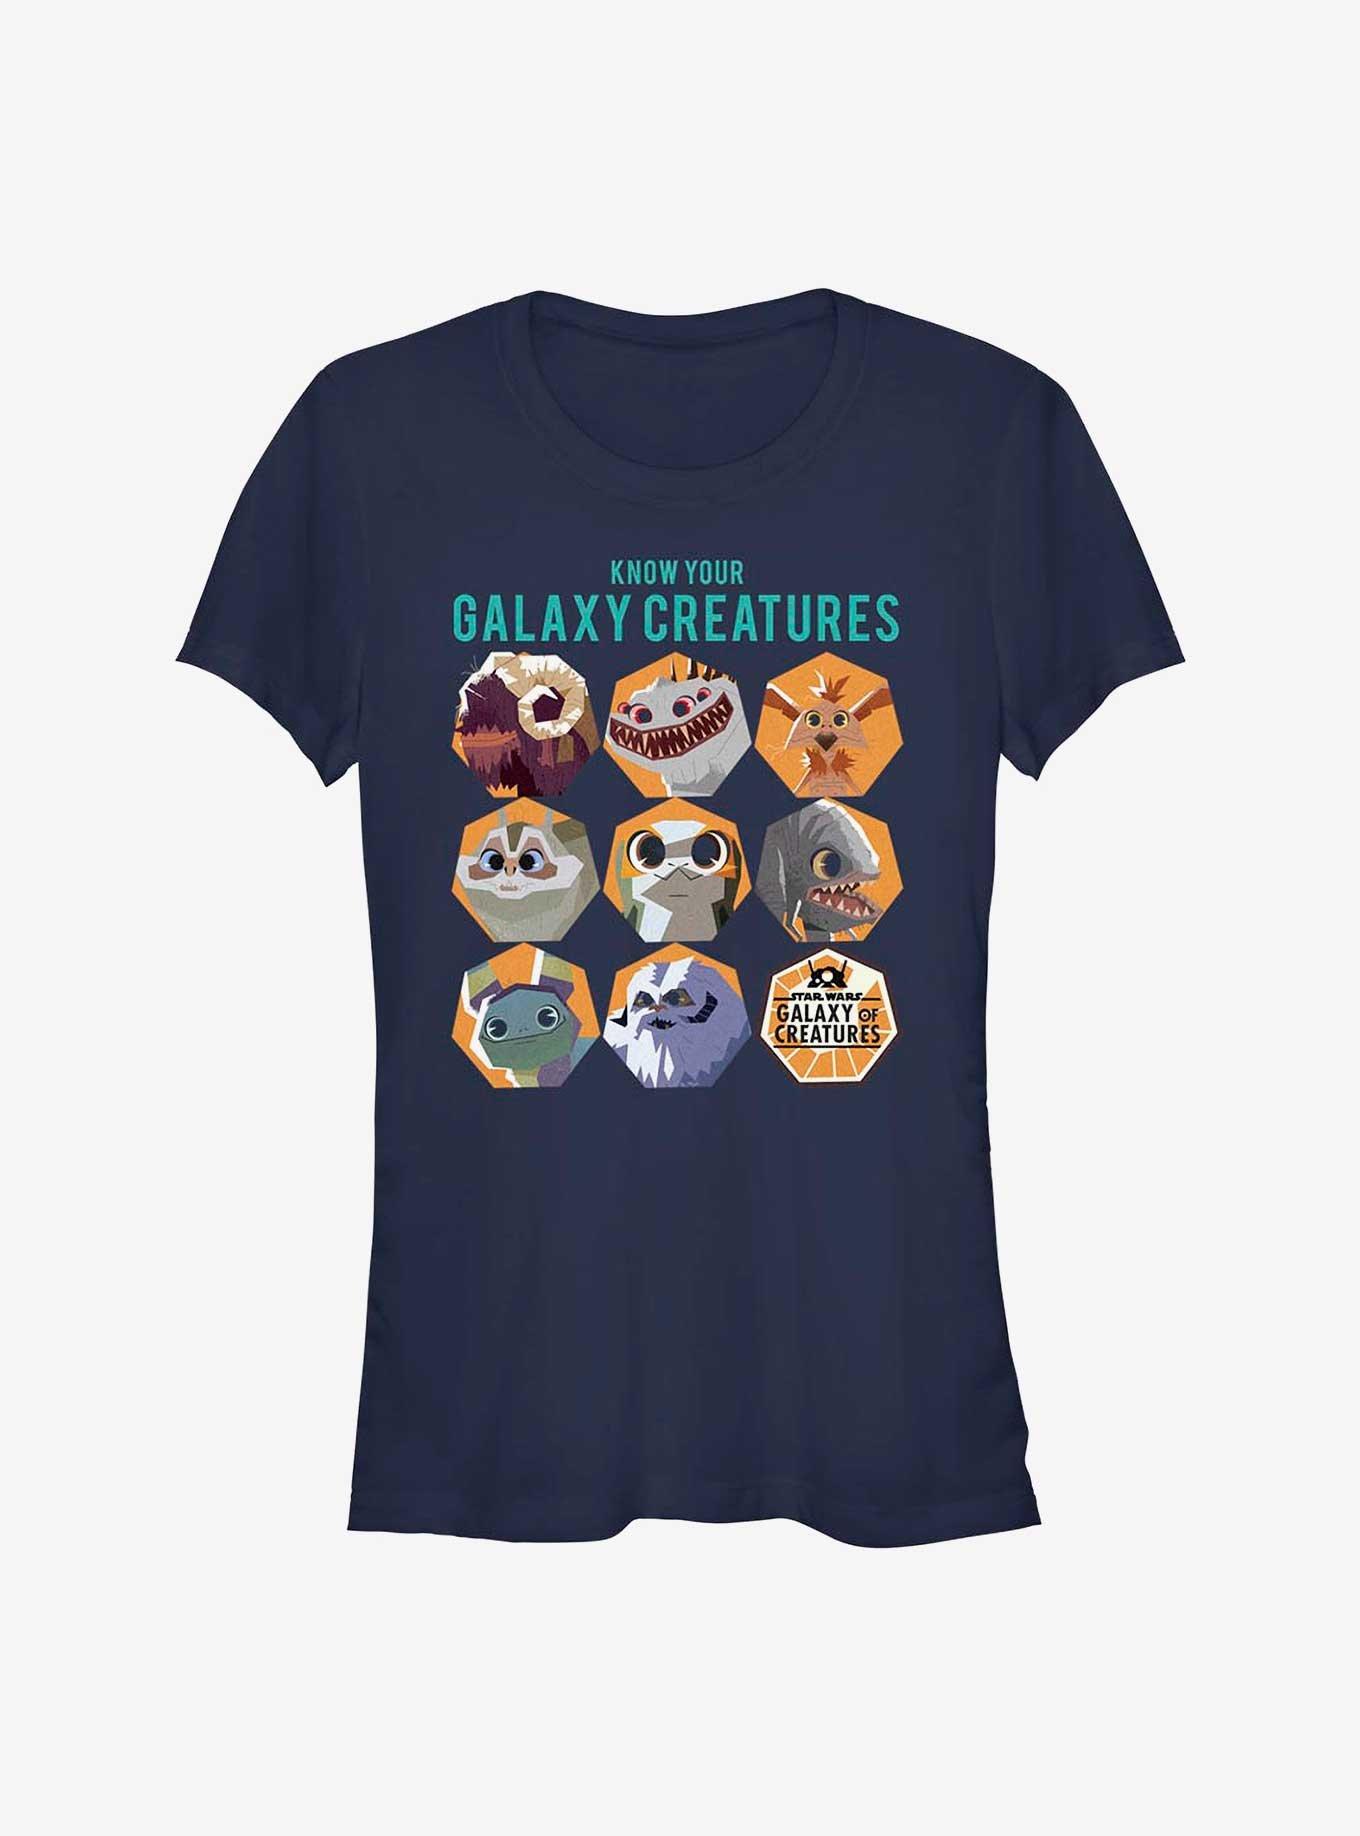 Star Wars: Galaxy Of Creatures Creature Chart Girls T-Shirt